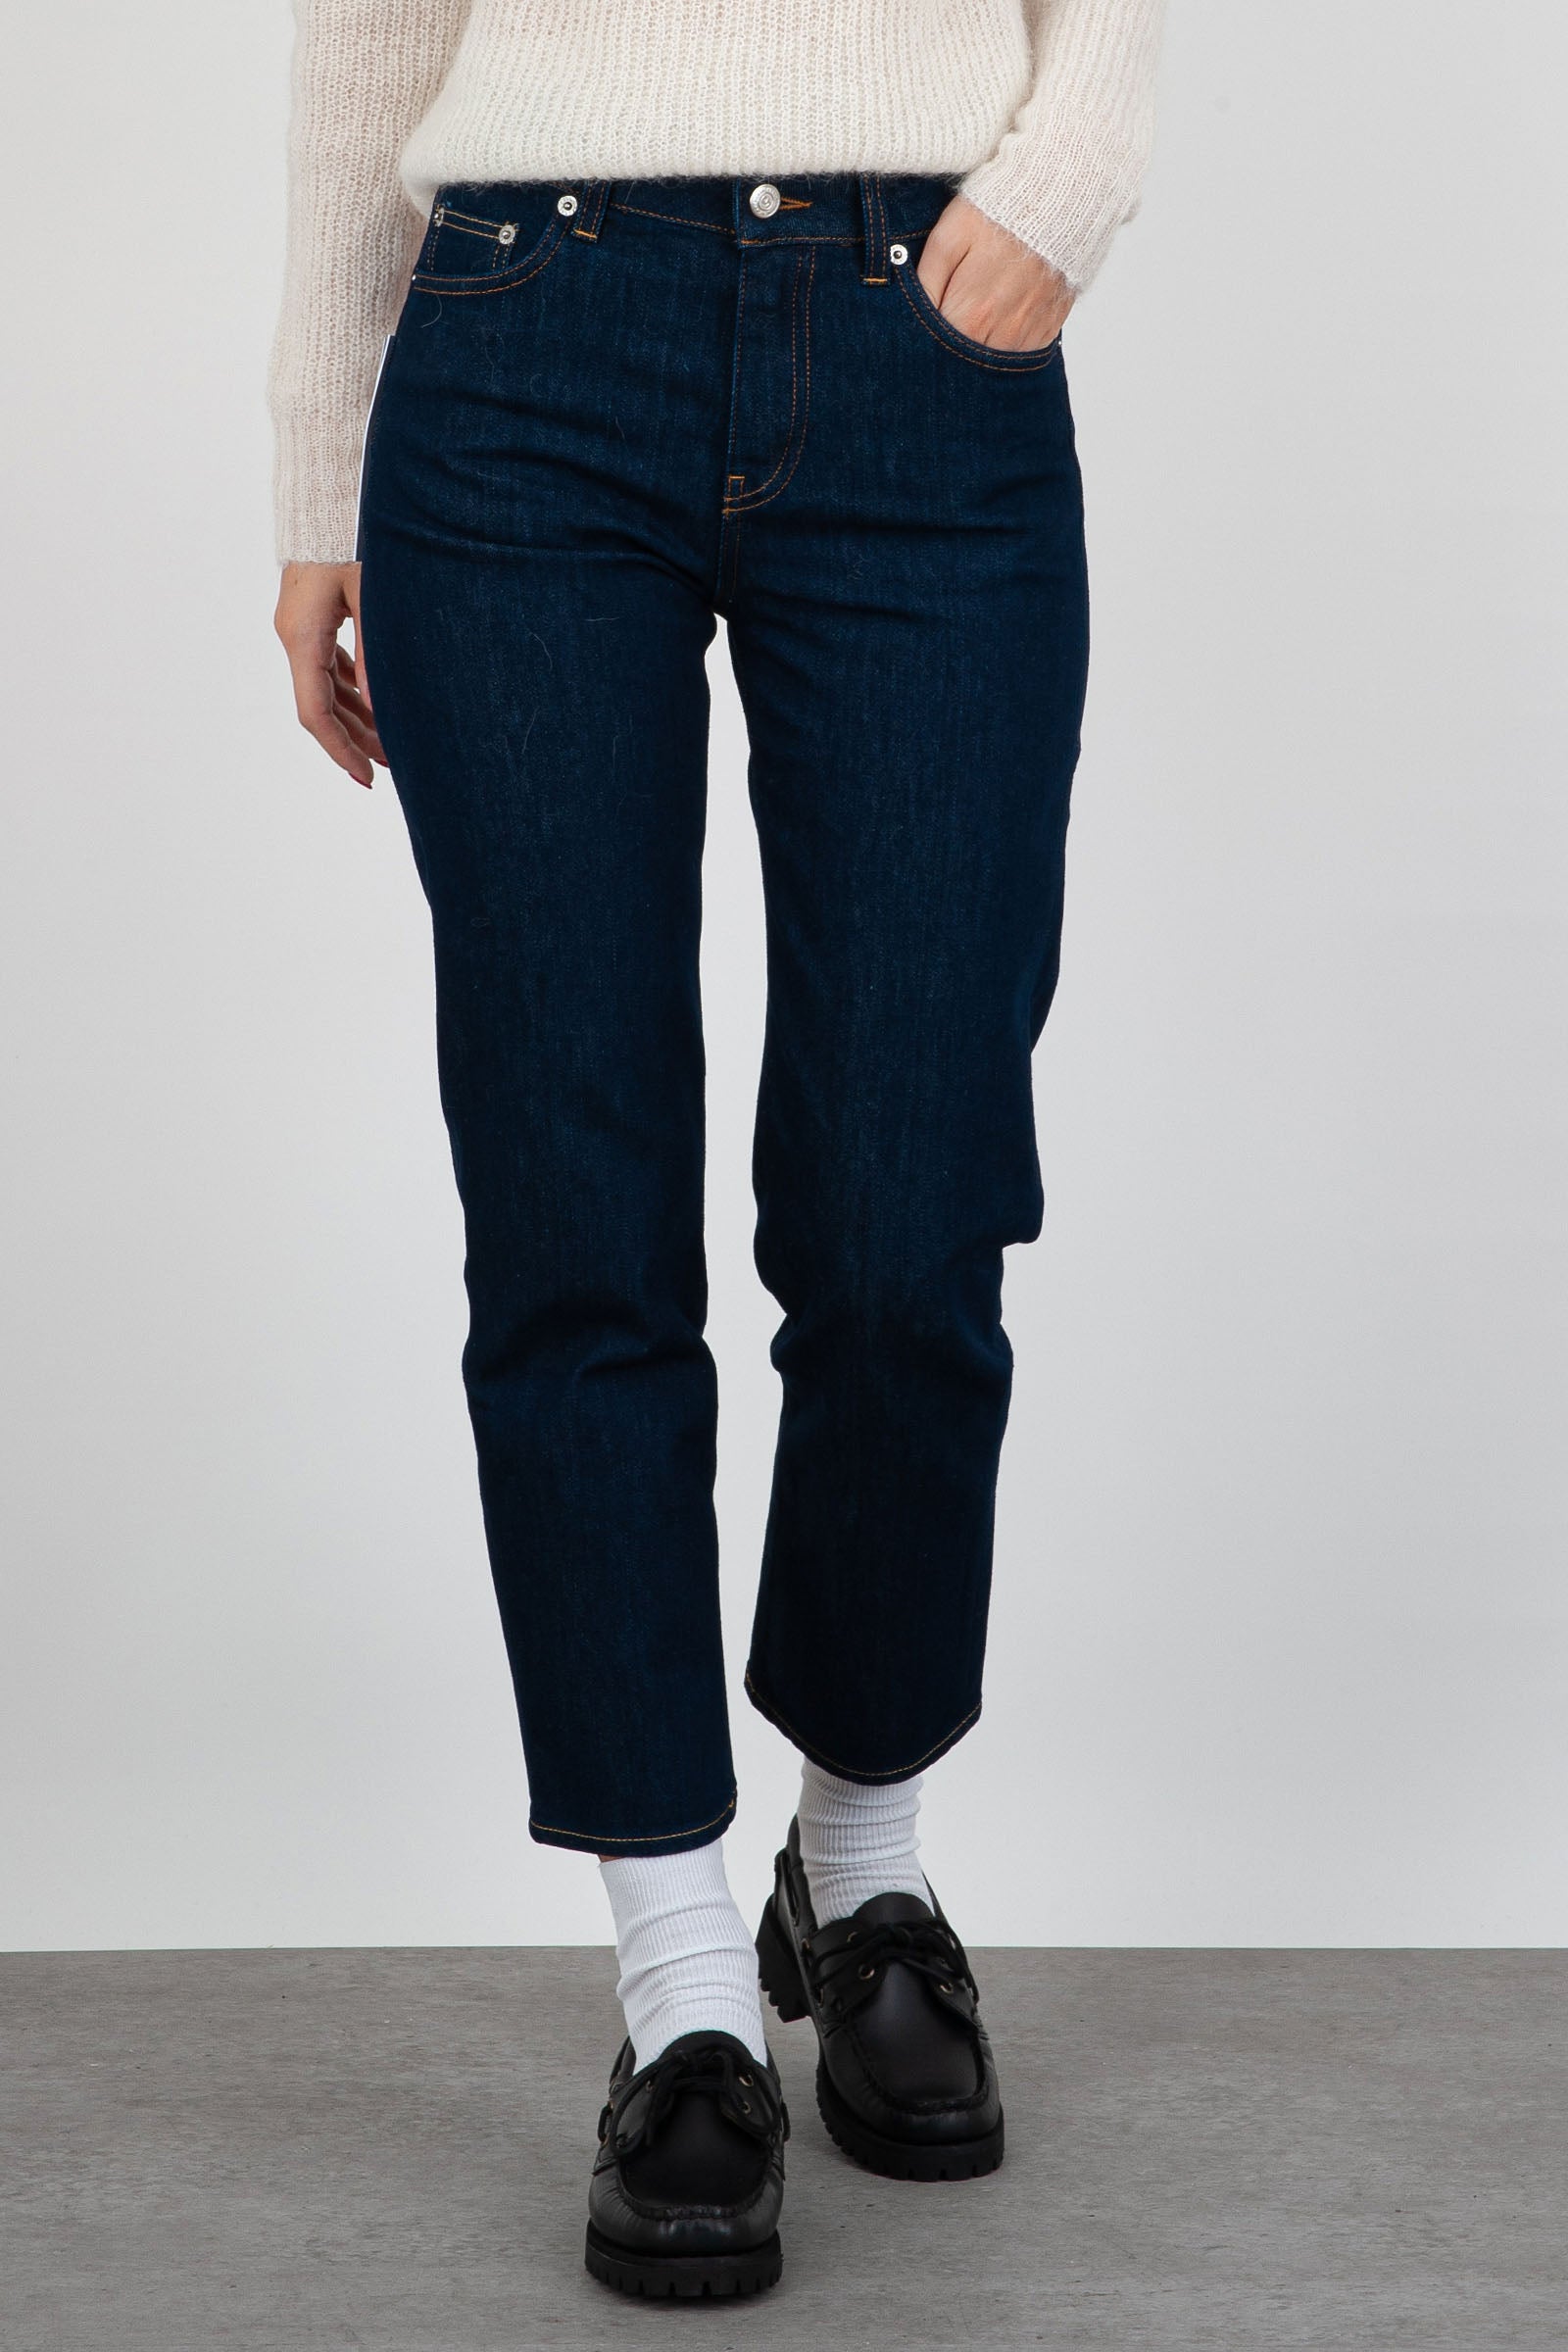 Adid Medium Blue Women's Jeans - 1